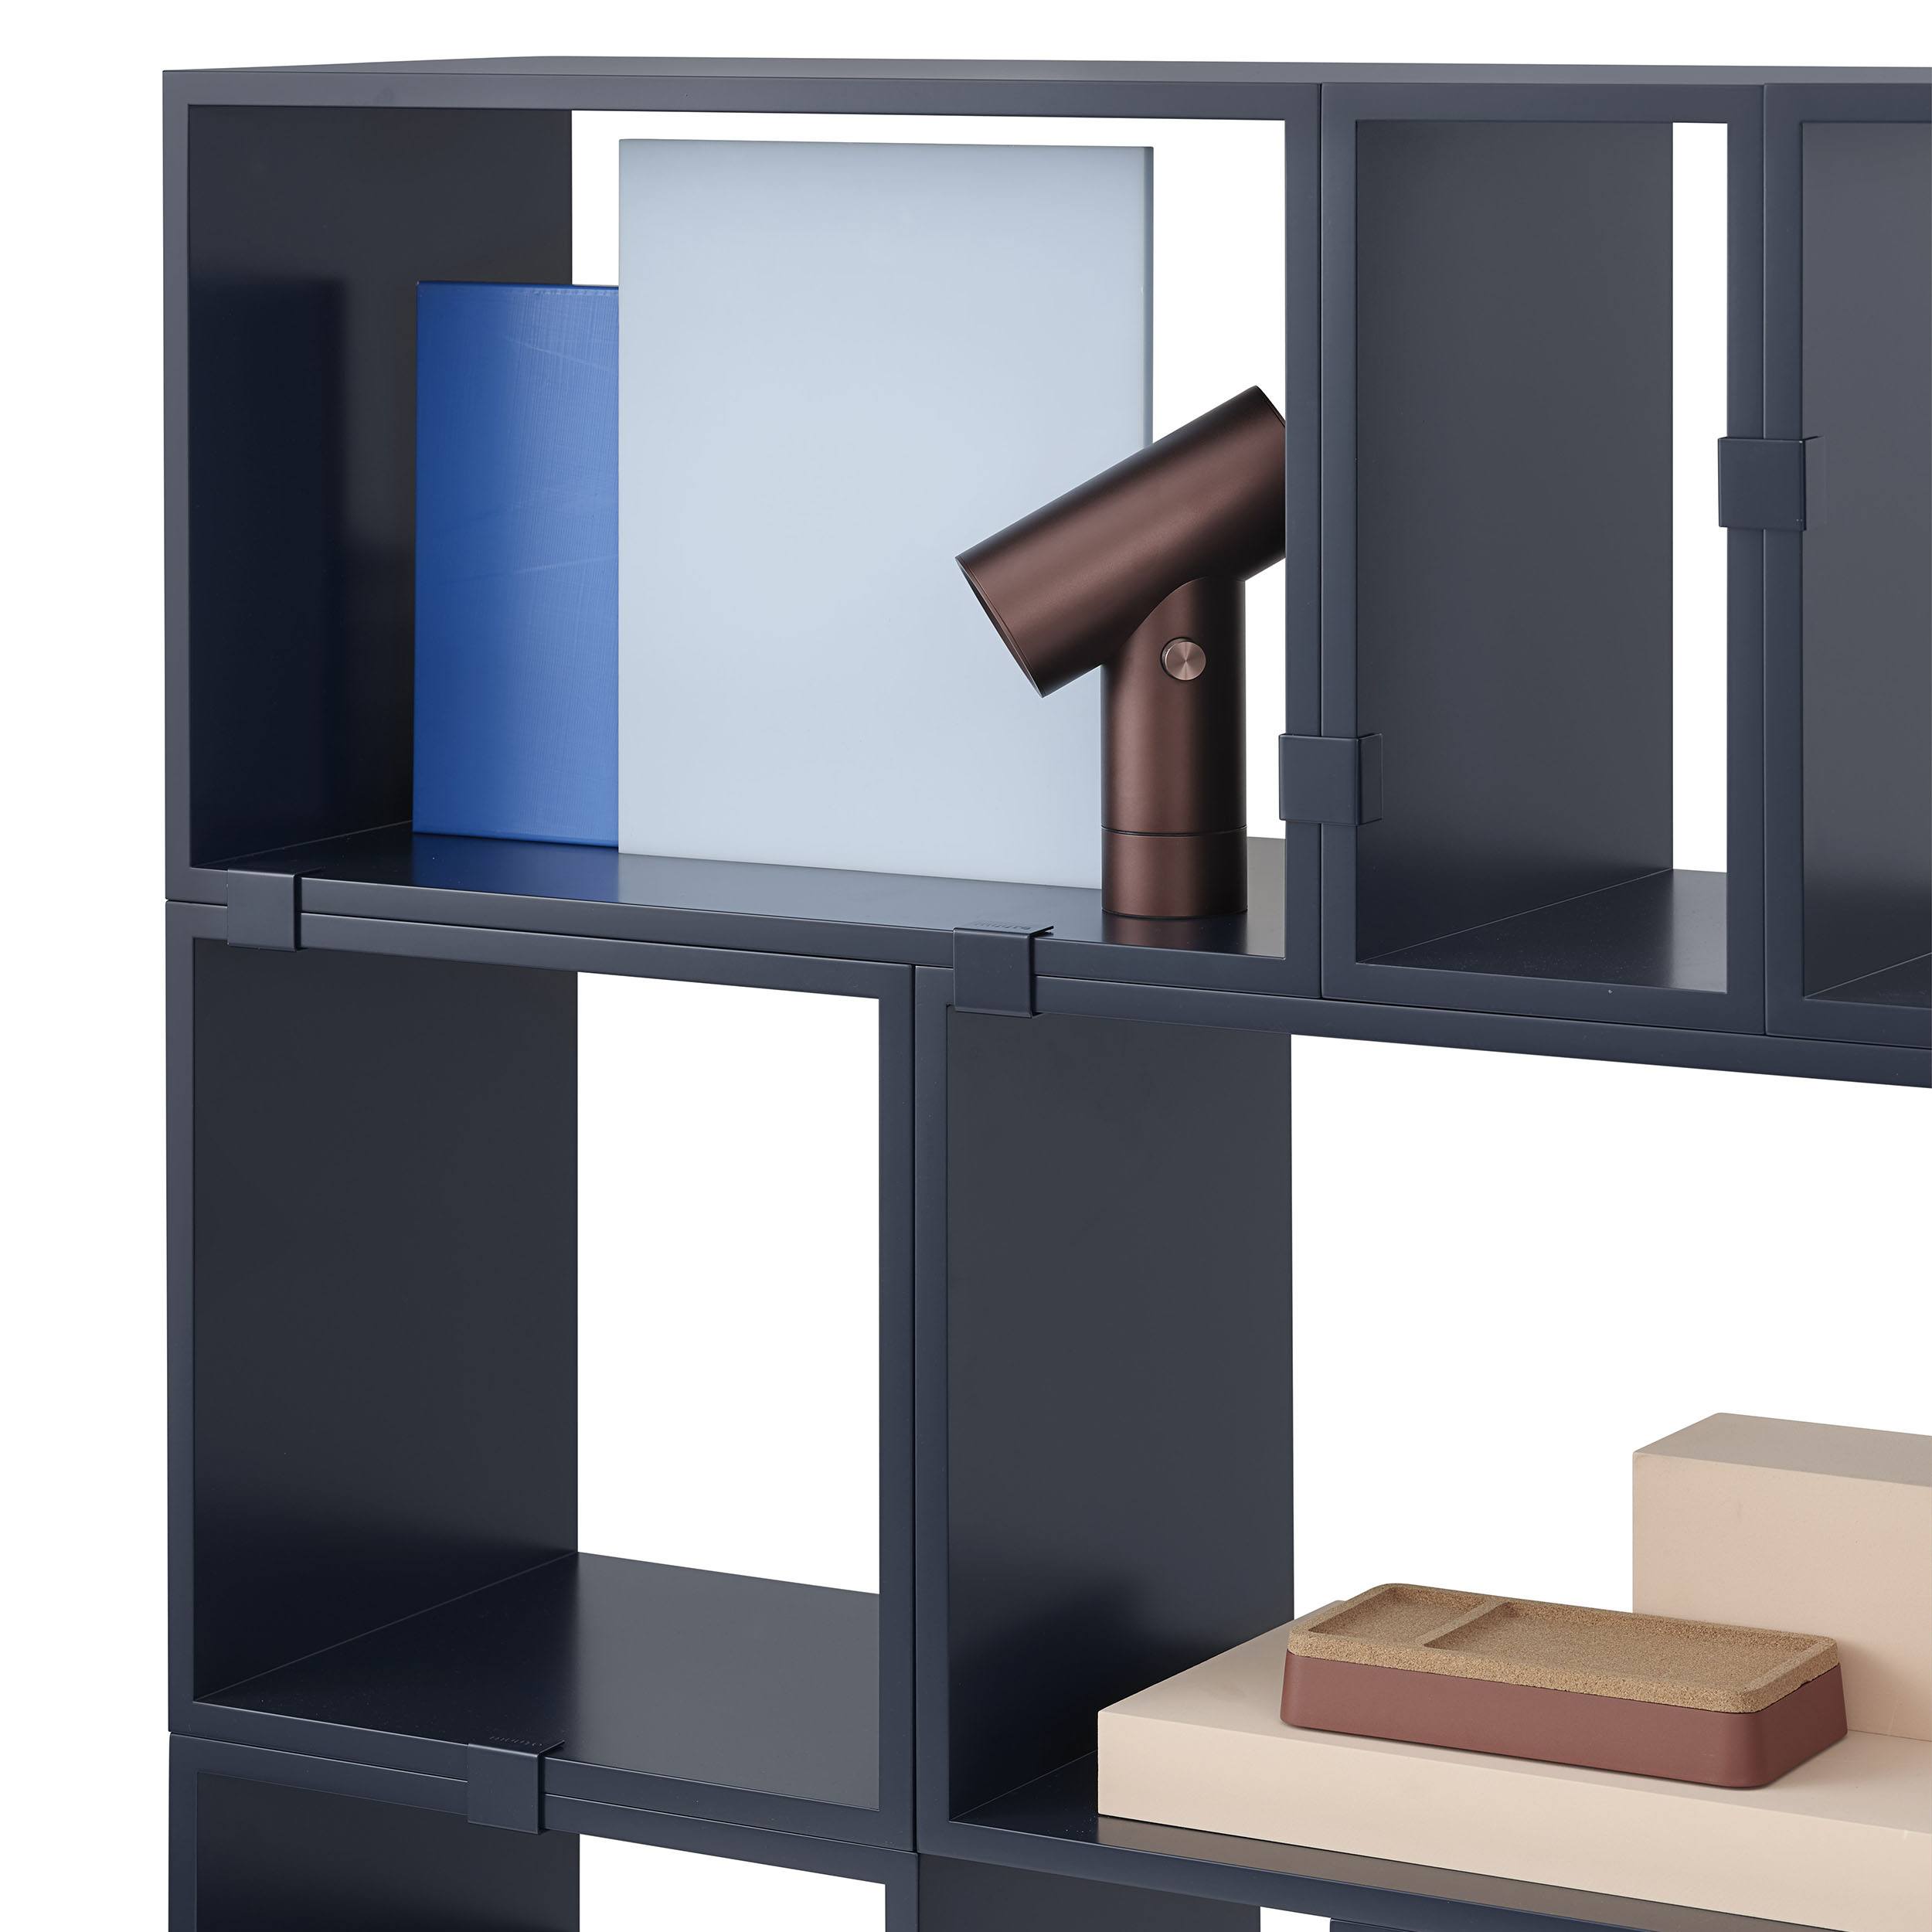 Stacked Bookshelf Configuration 10 Version 1 Regal